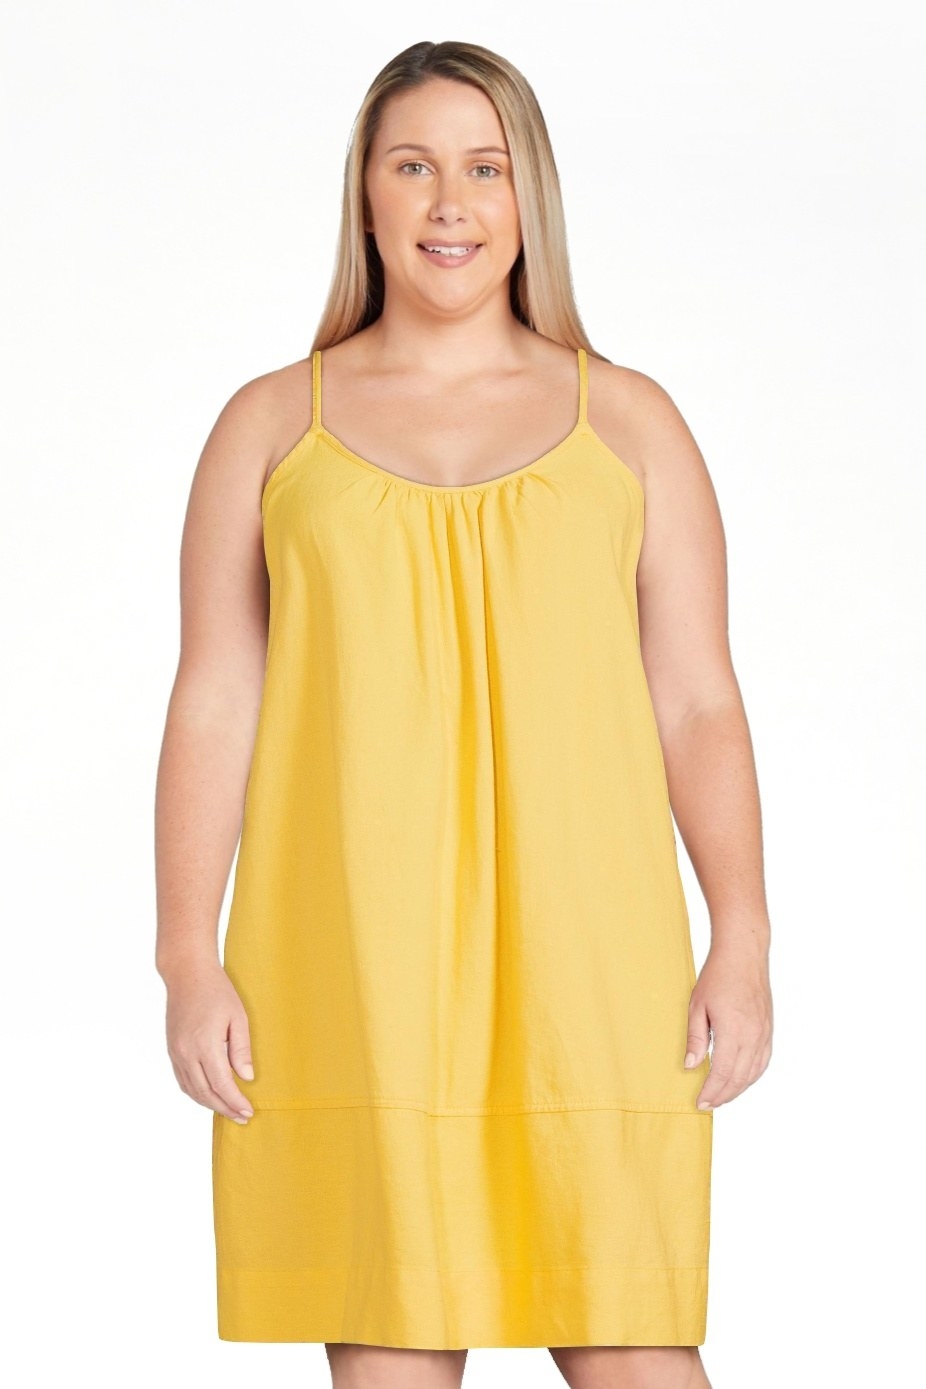 Model wearing the dress in yellow